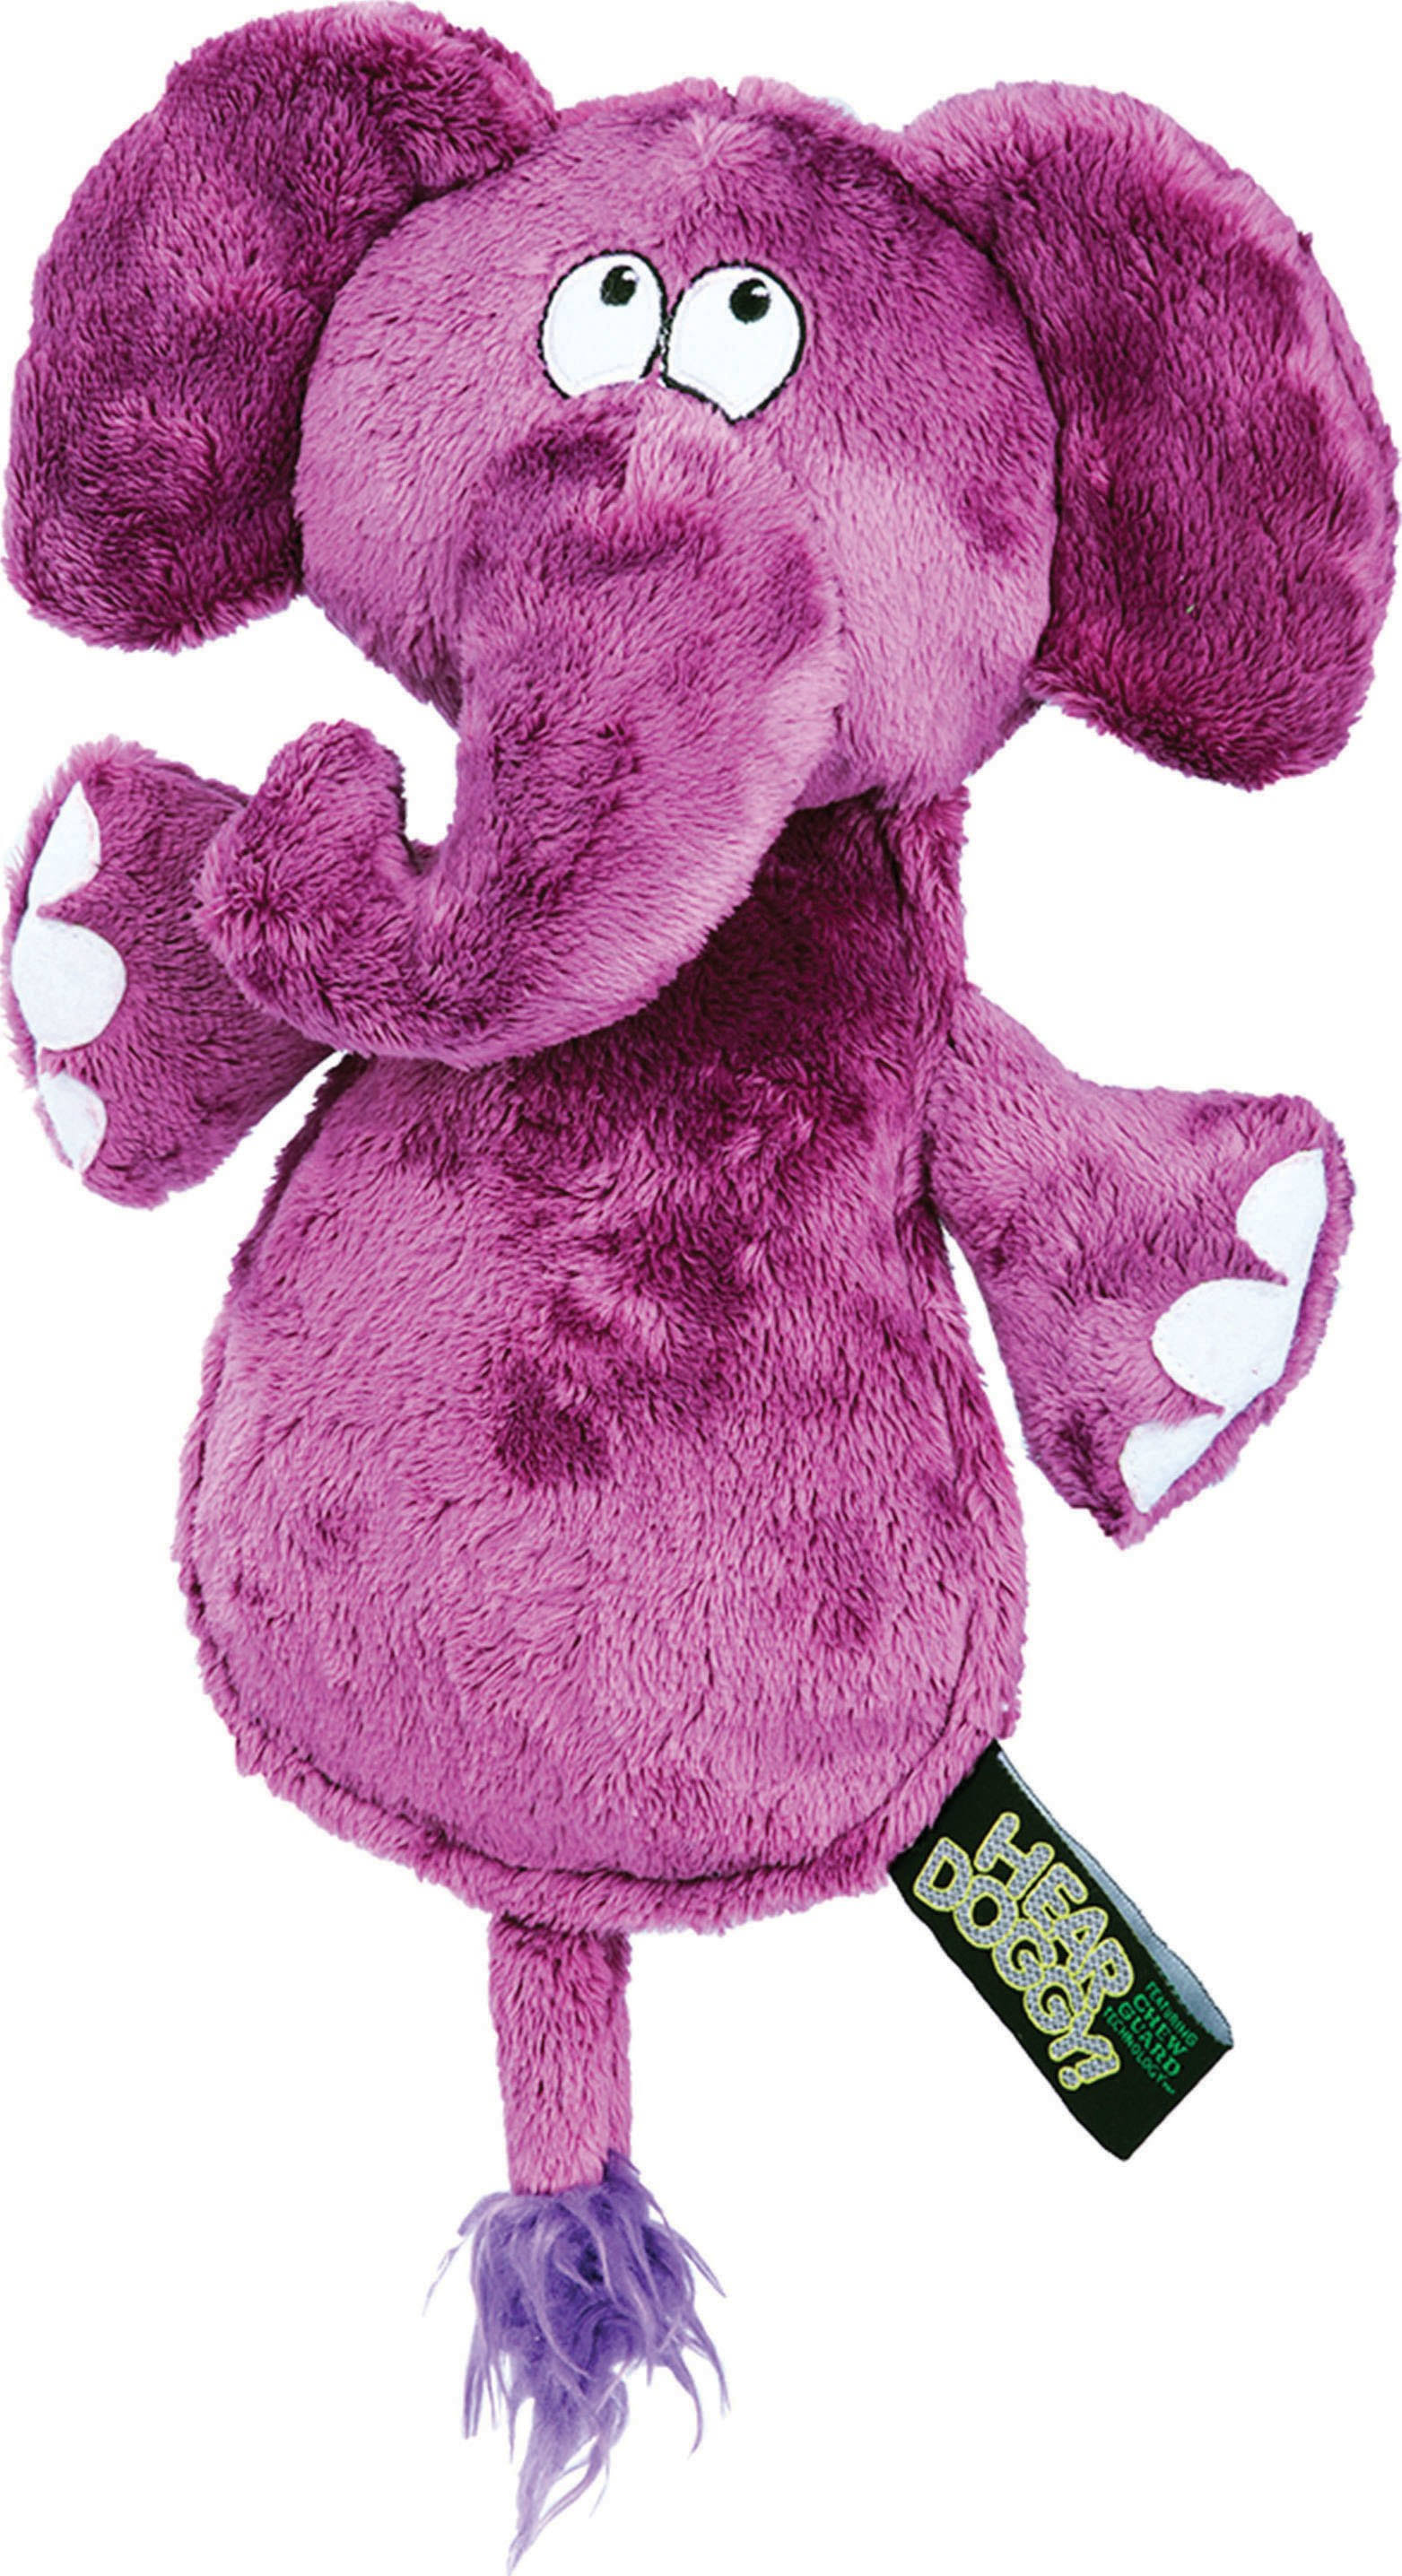 Hear Doggy Chew Guard Flats Toy - Elephant, Purple